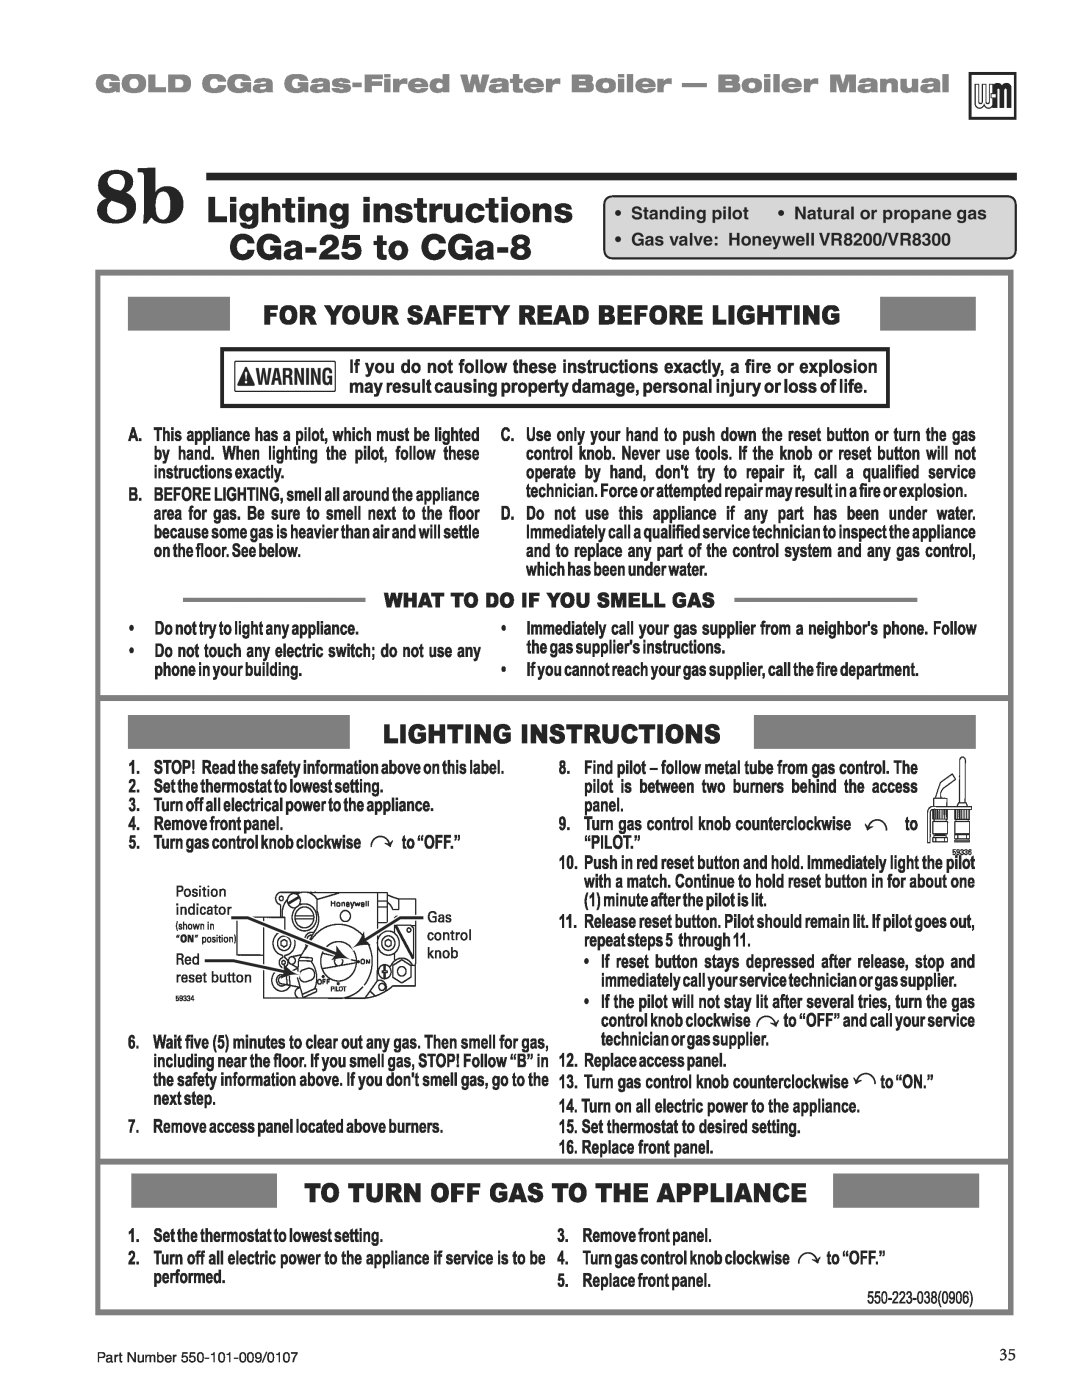 Weil-McLain CGA25SPDN manual 8b Lighting instructions CGa-25to CGa-8, GOLD CGa Gas-FiredWater Boiler - Boiler Manual 